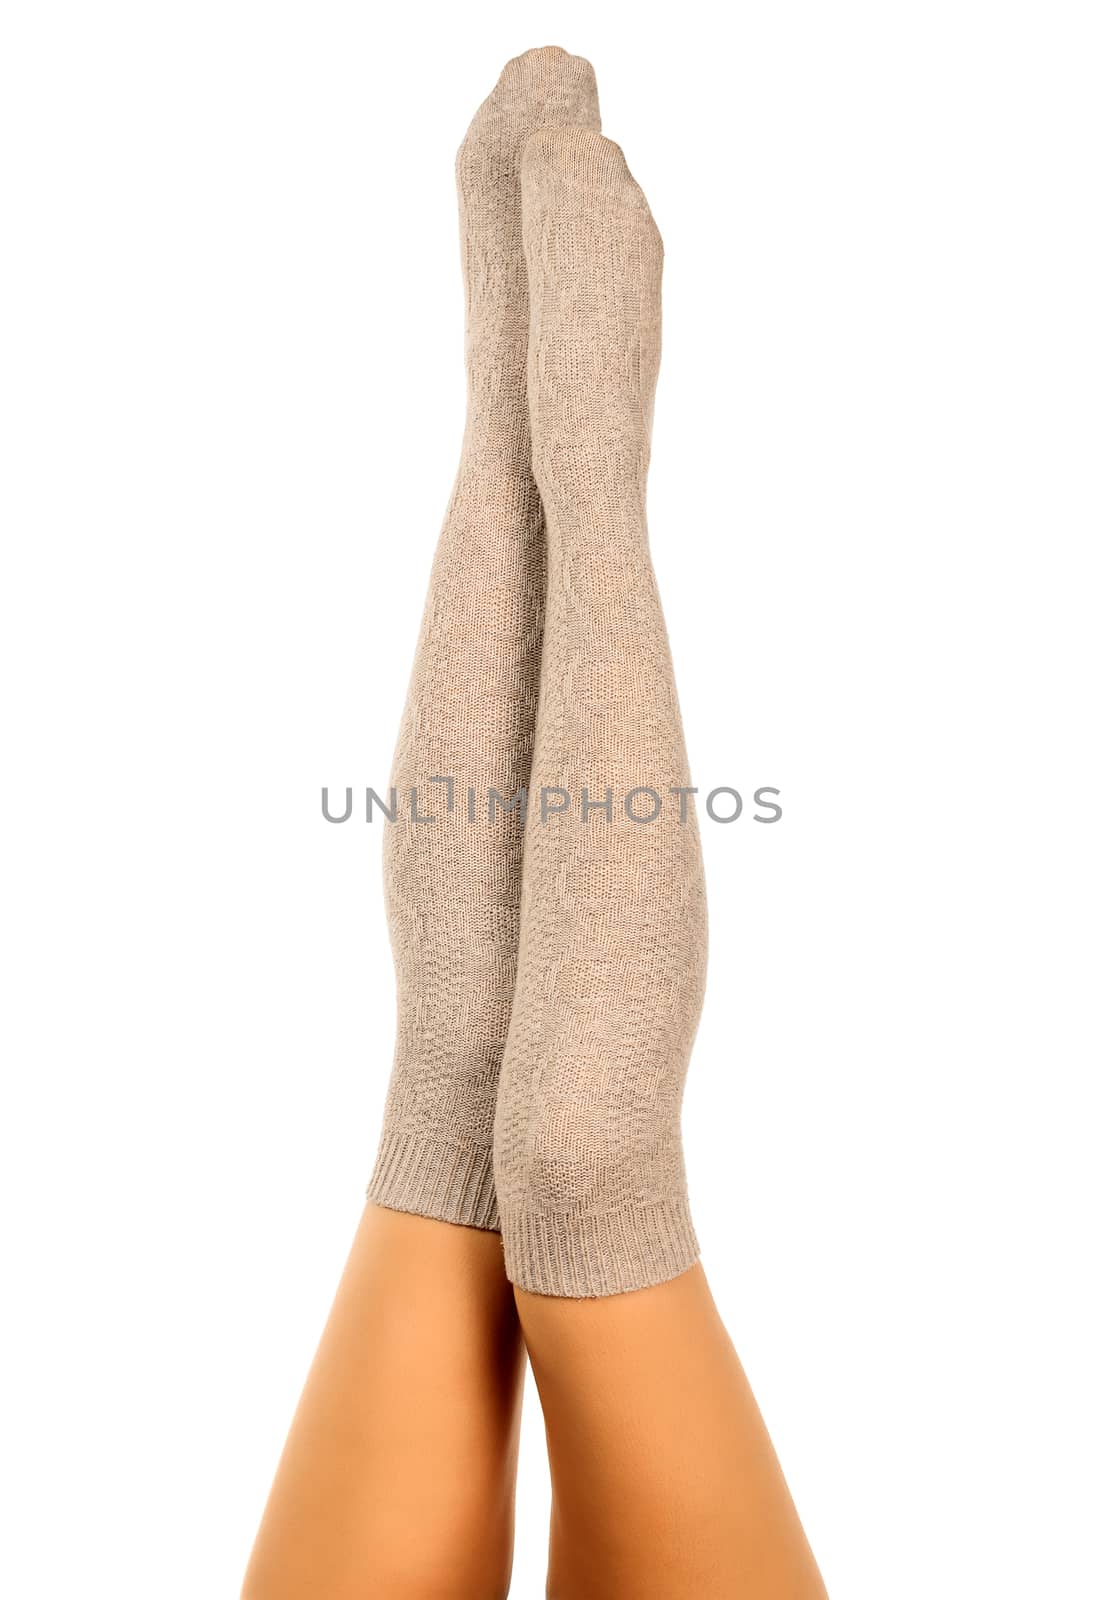 Long female legs in knitted socks by Nobilior